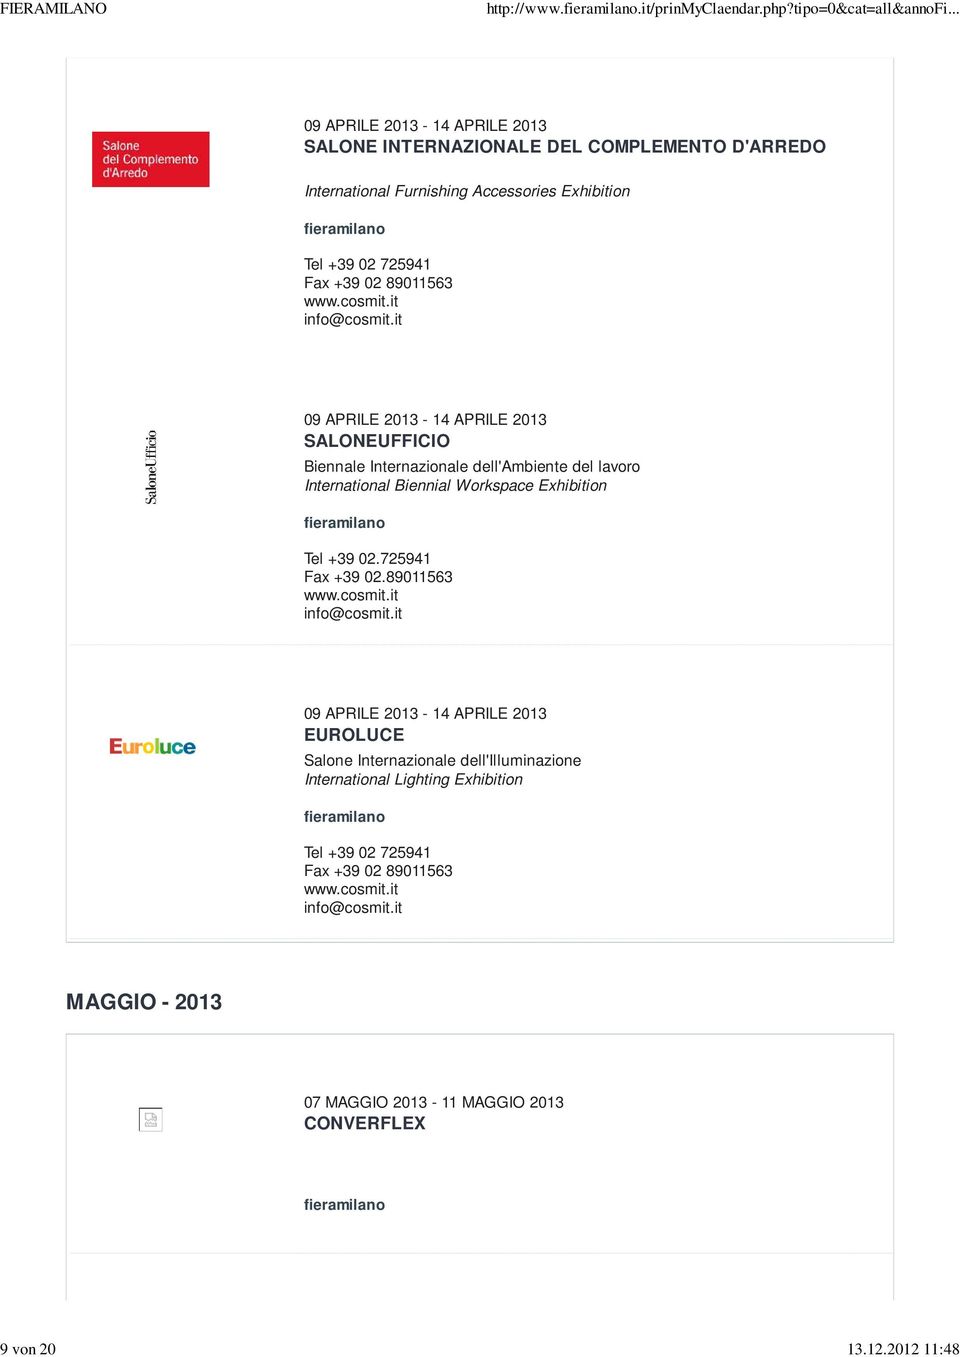 cosmit.it info@cosmit.it 09 APRILE 2013-14 APRILE 2013 SALONEUFFICIO Biennale Internazionale dell'ambiente del lavoro International Biennial Workspace Exhibition Tel +39 02.